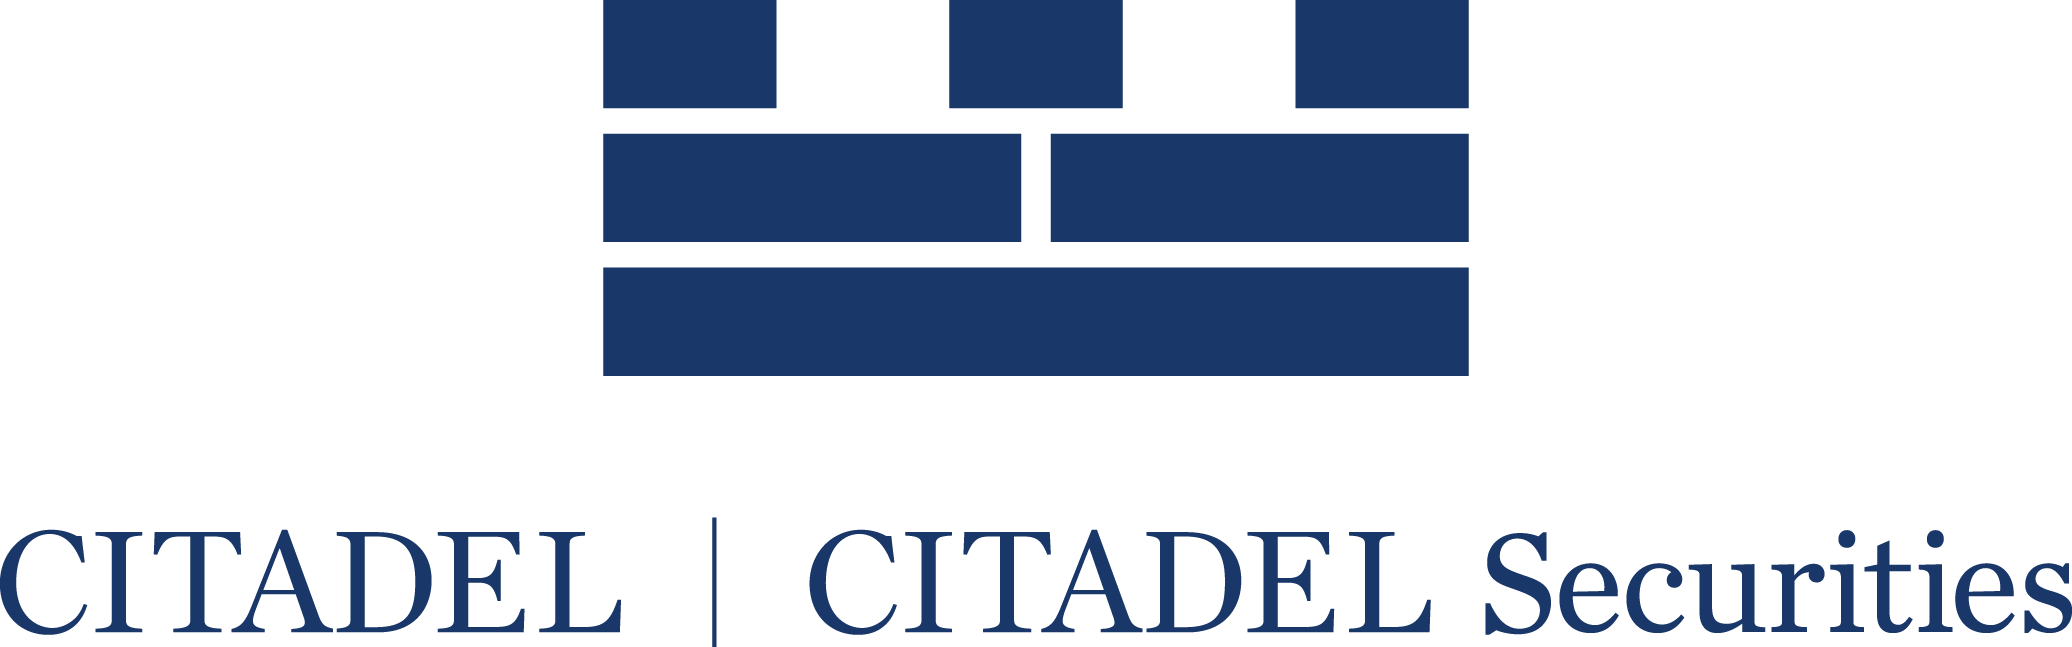 Citadel and Citadel Securities Logo